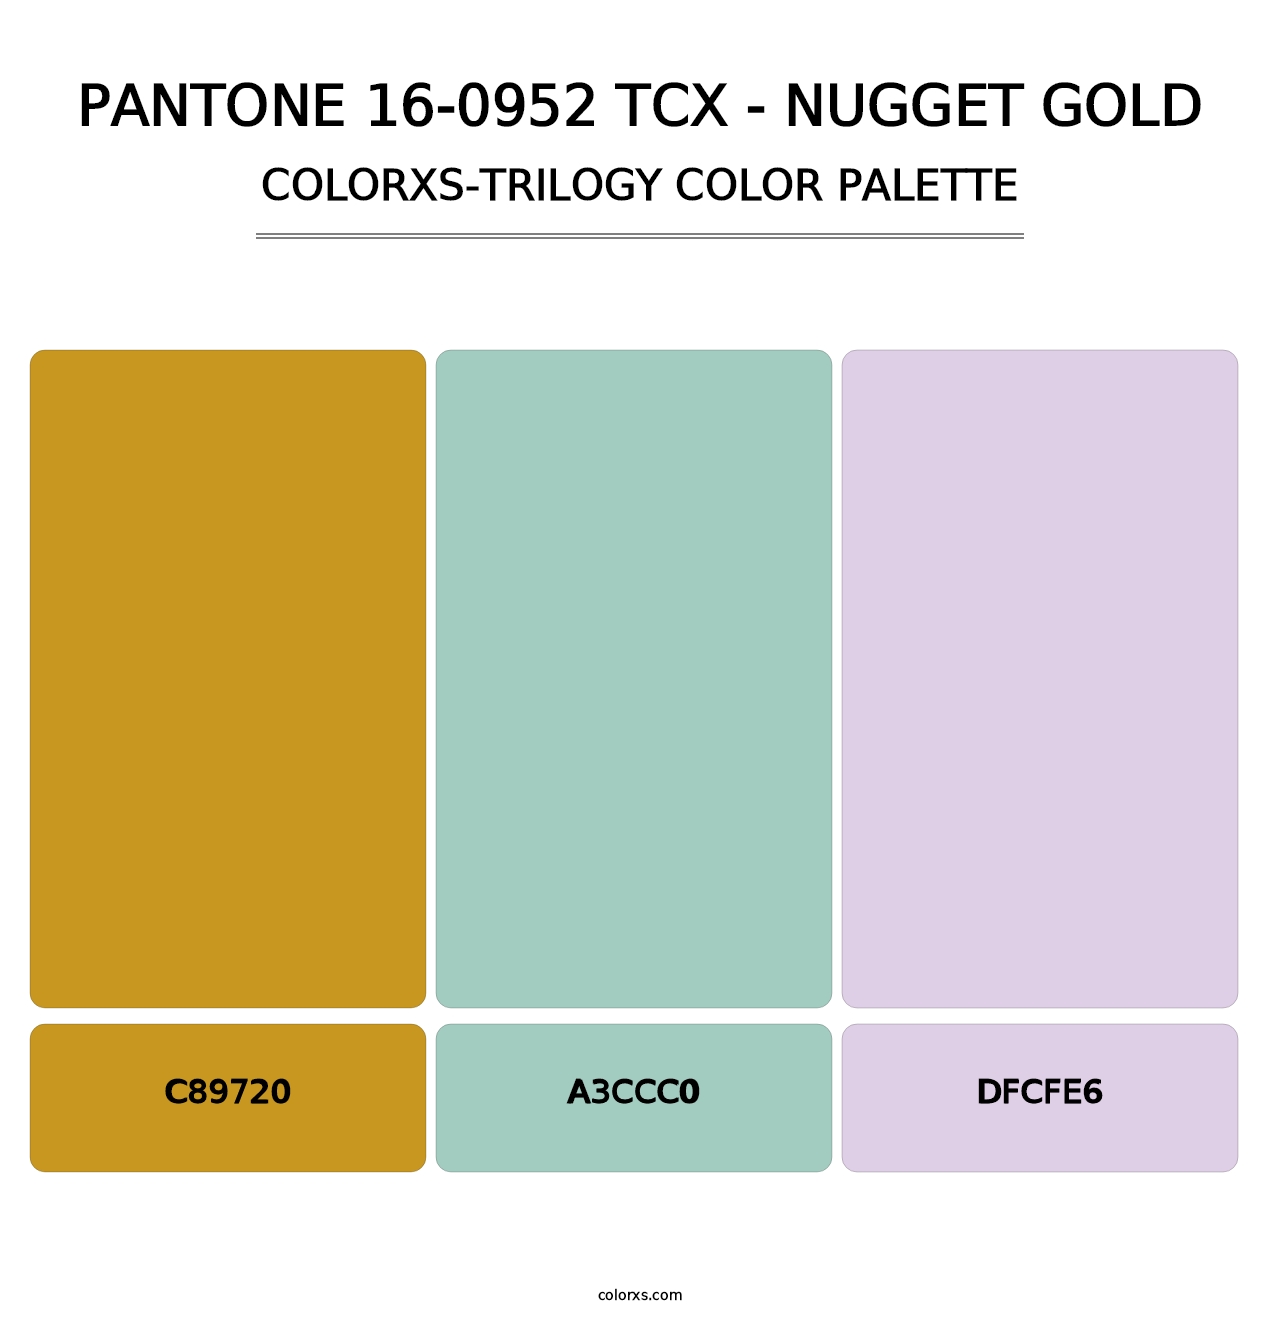 PANTONE 16-0952 TCX - Nugget Gold - Colorxs Trilogy Palette